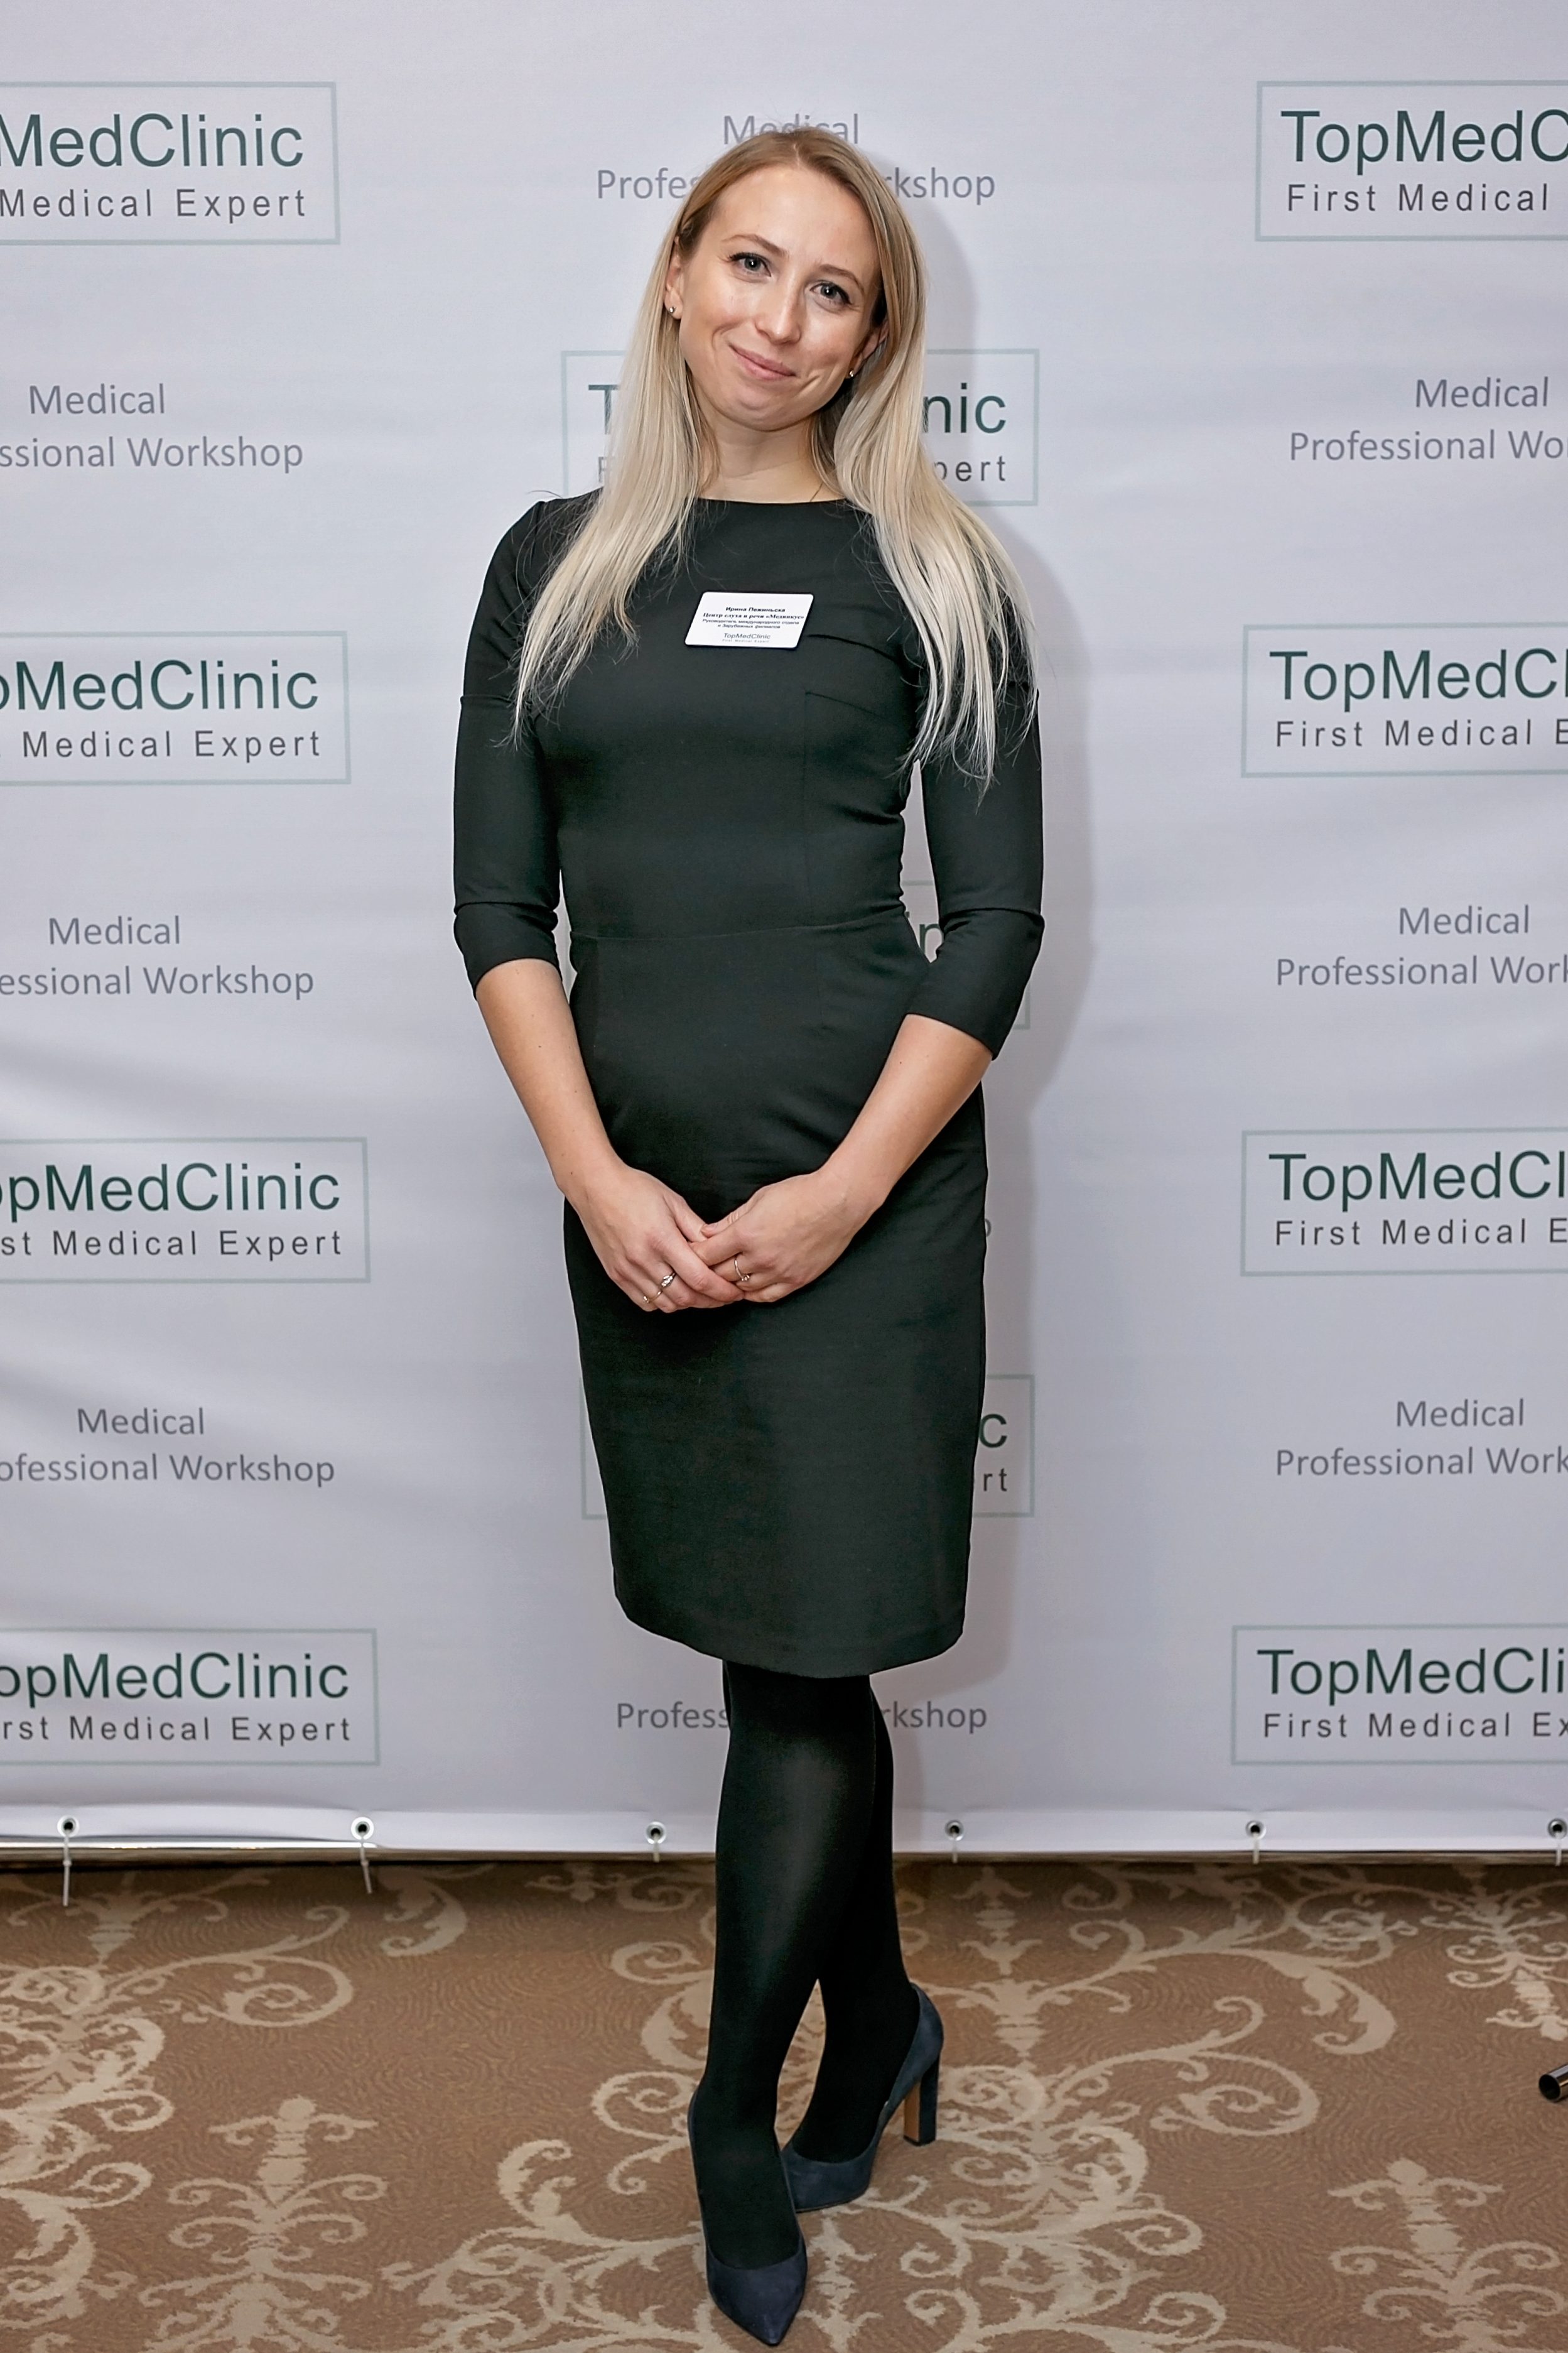 Targi_Medical_Profess_Workshop_MoskwaXI2019, Medincus